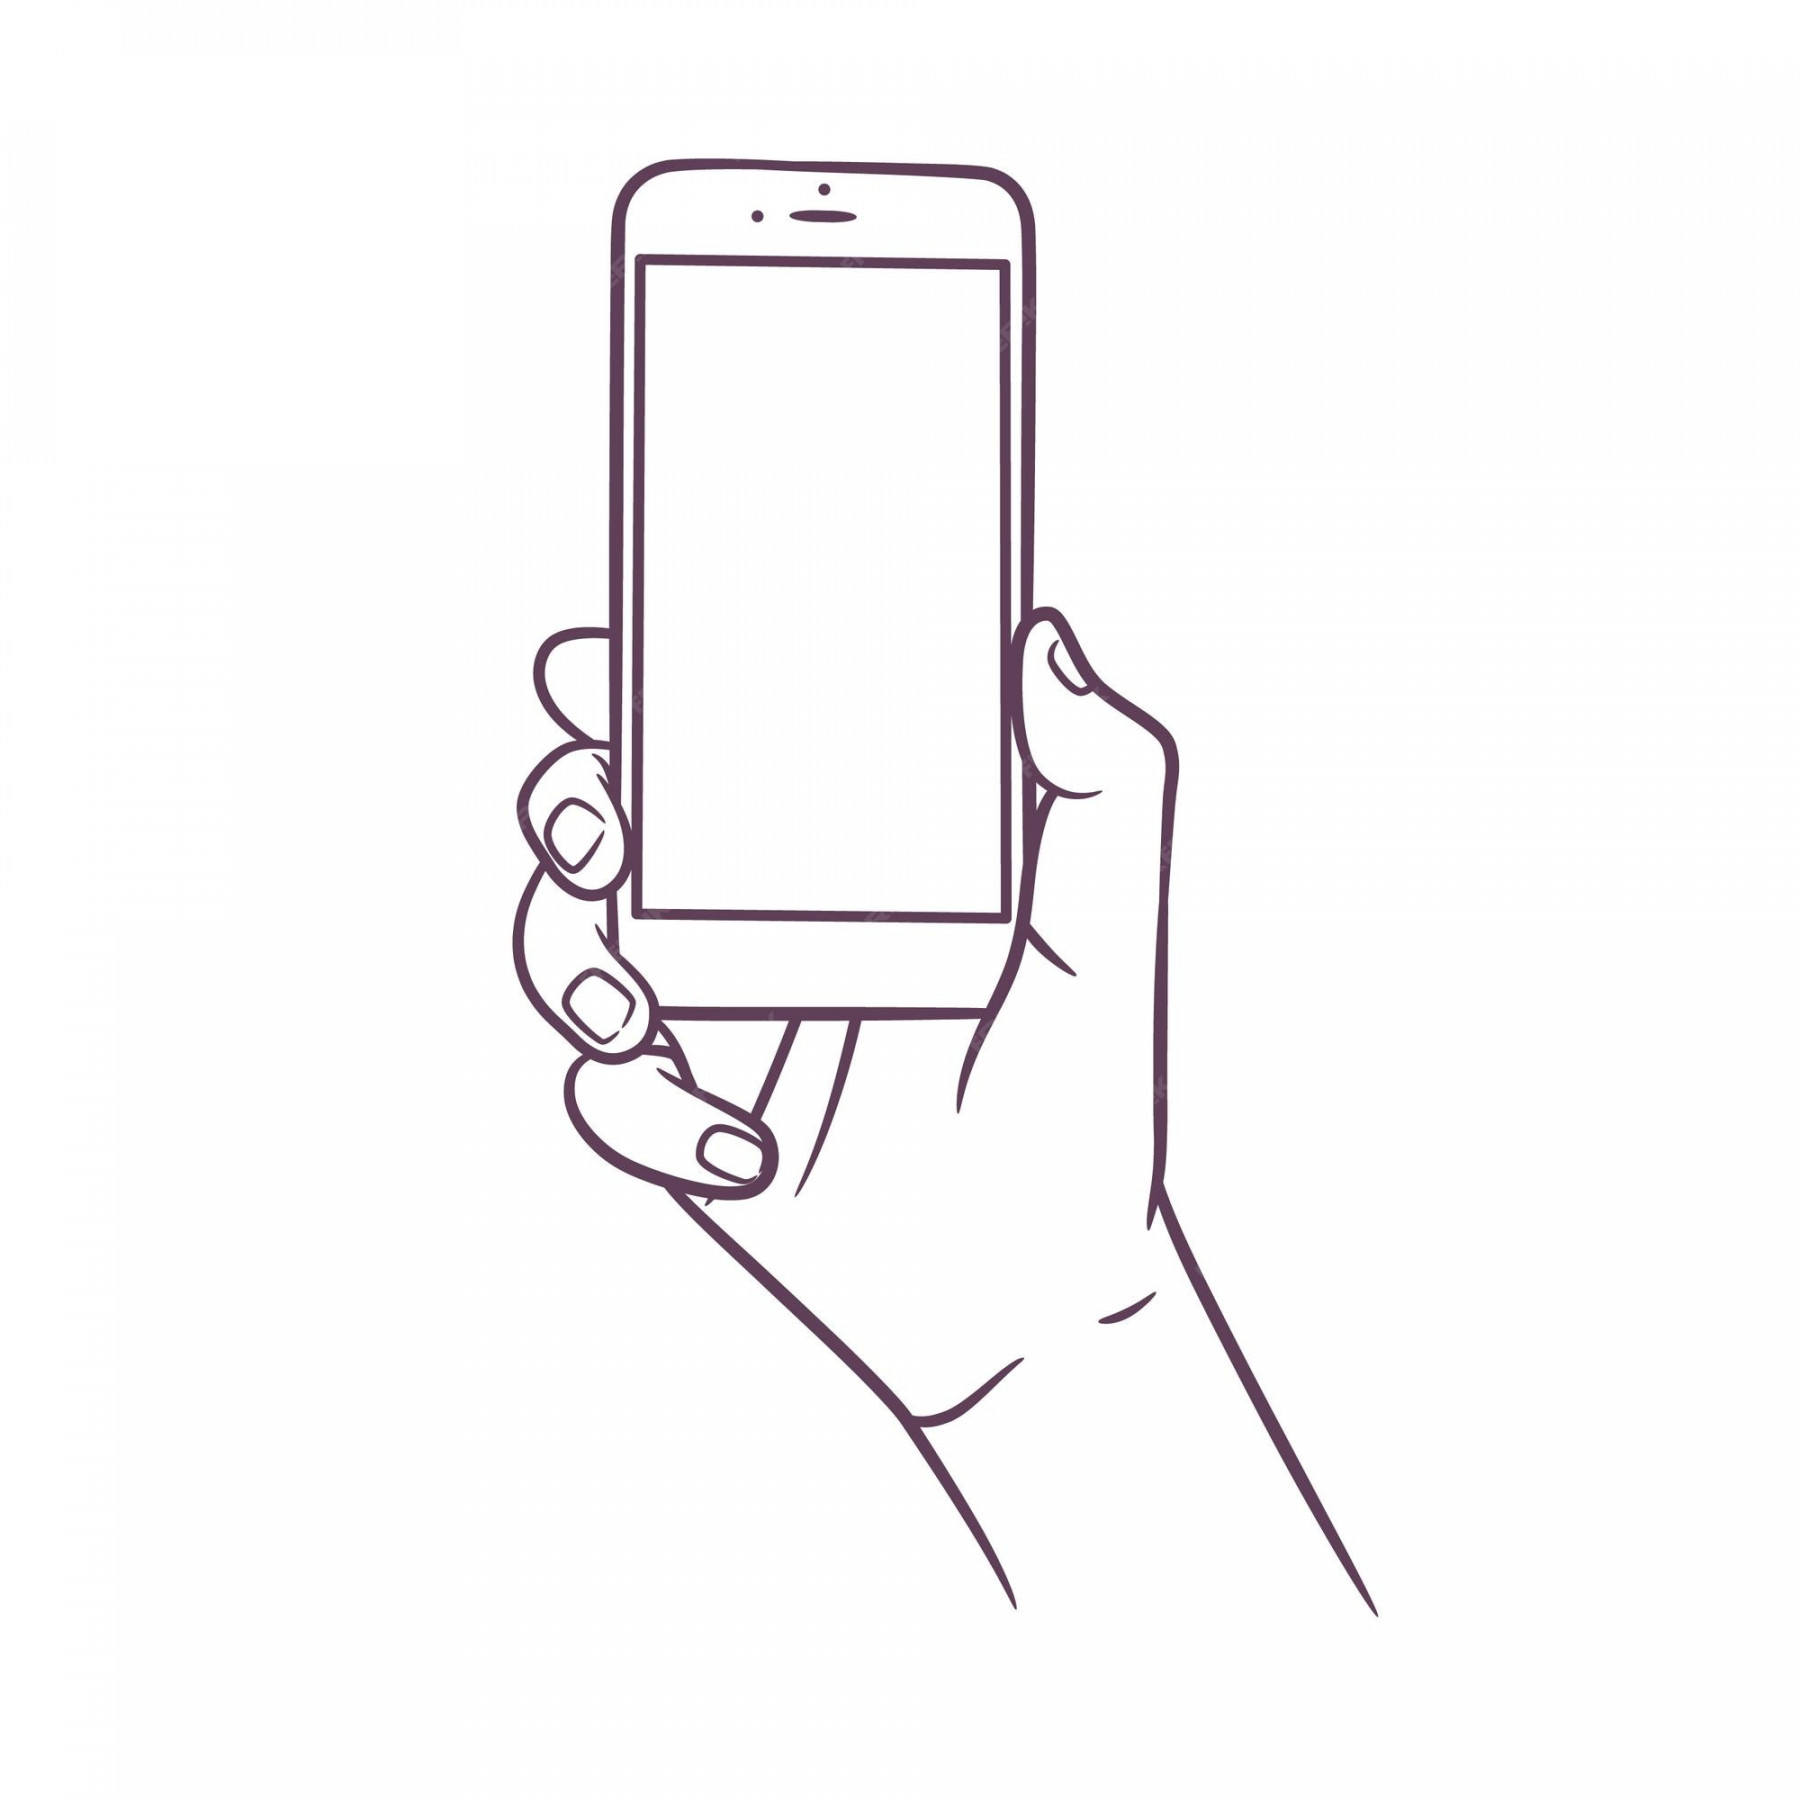 Premium Vector  Line art drawing of hand holding smart phone